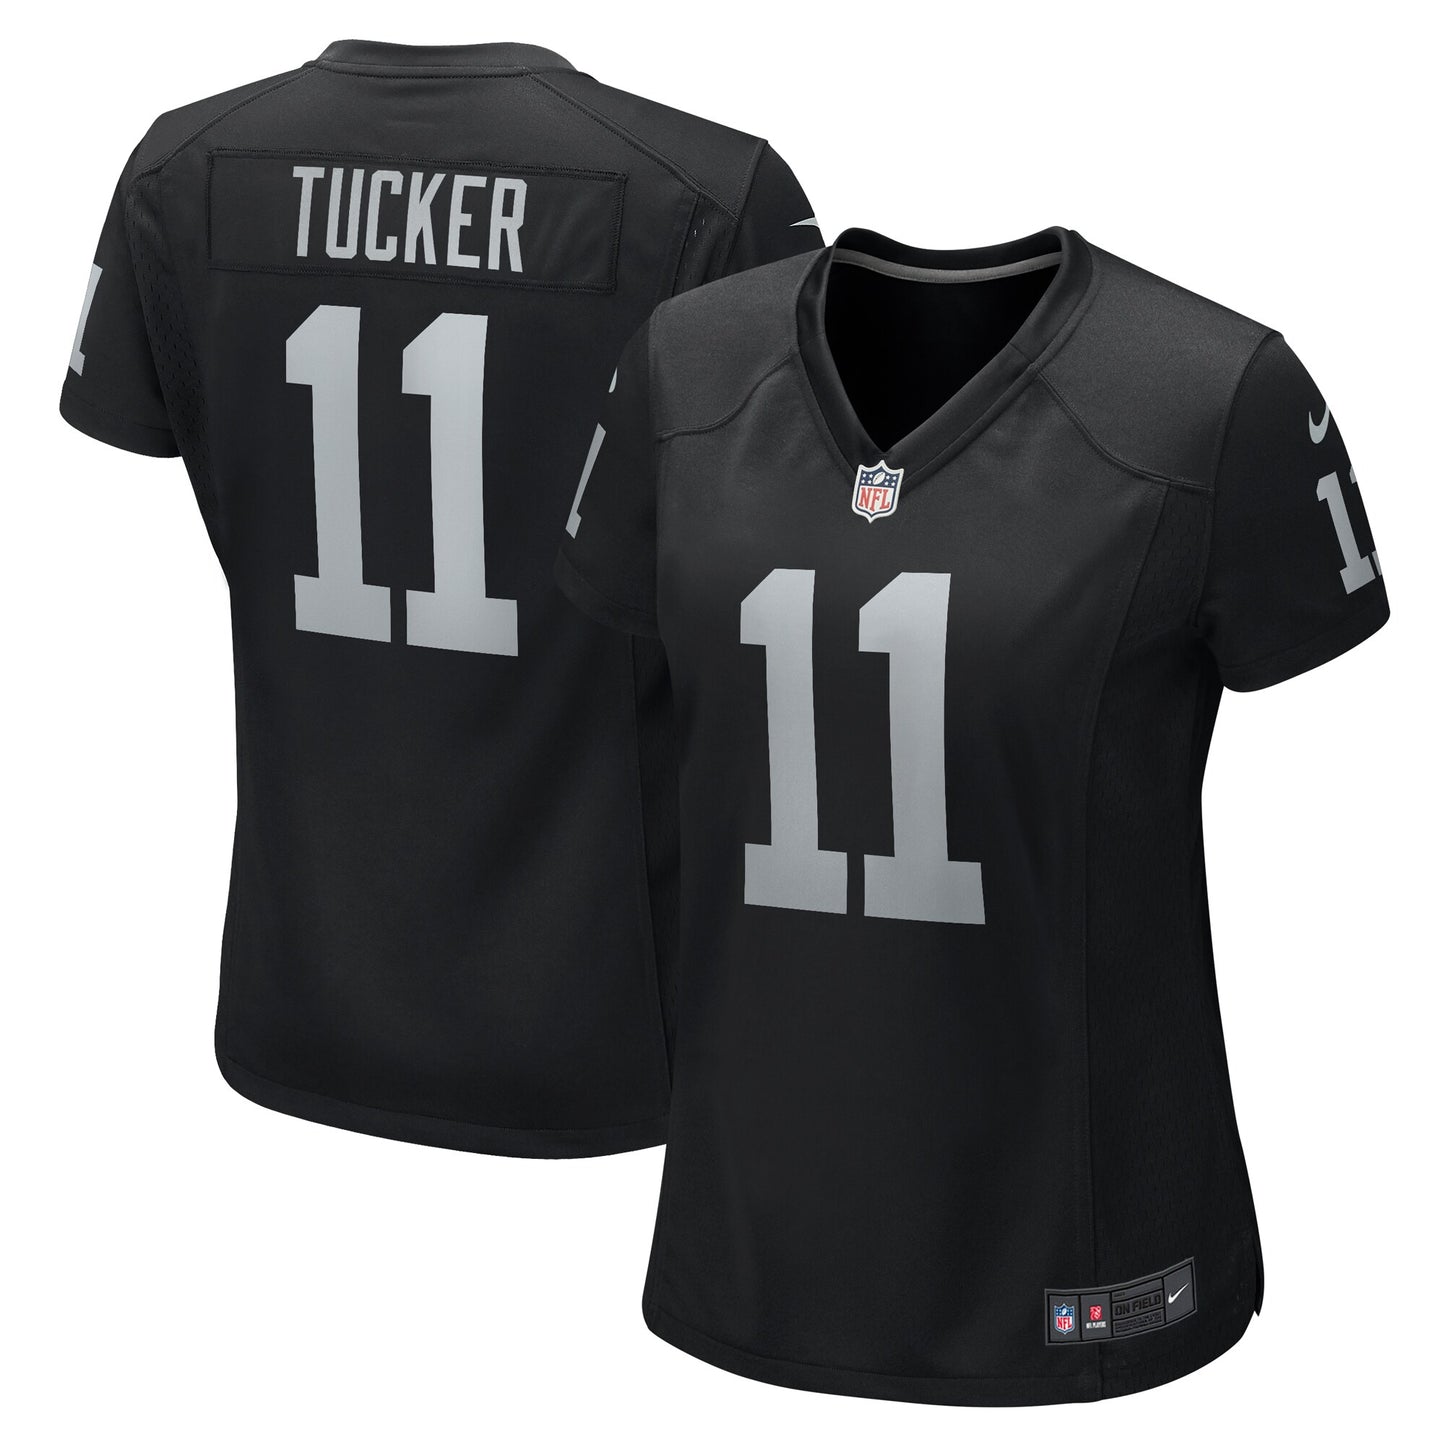 Tre Tucker Las Vegas Raiders Nike Women's Team Game Jersey -  Black